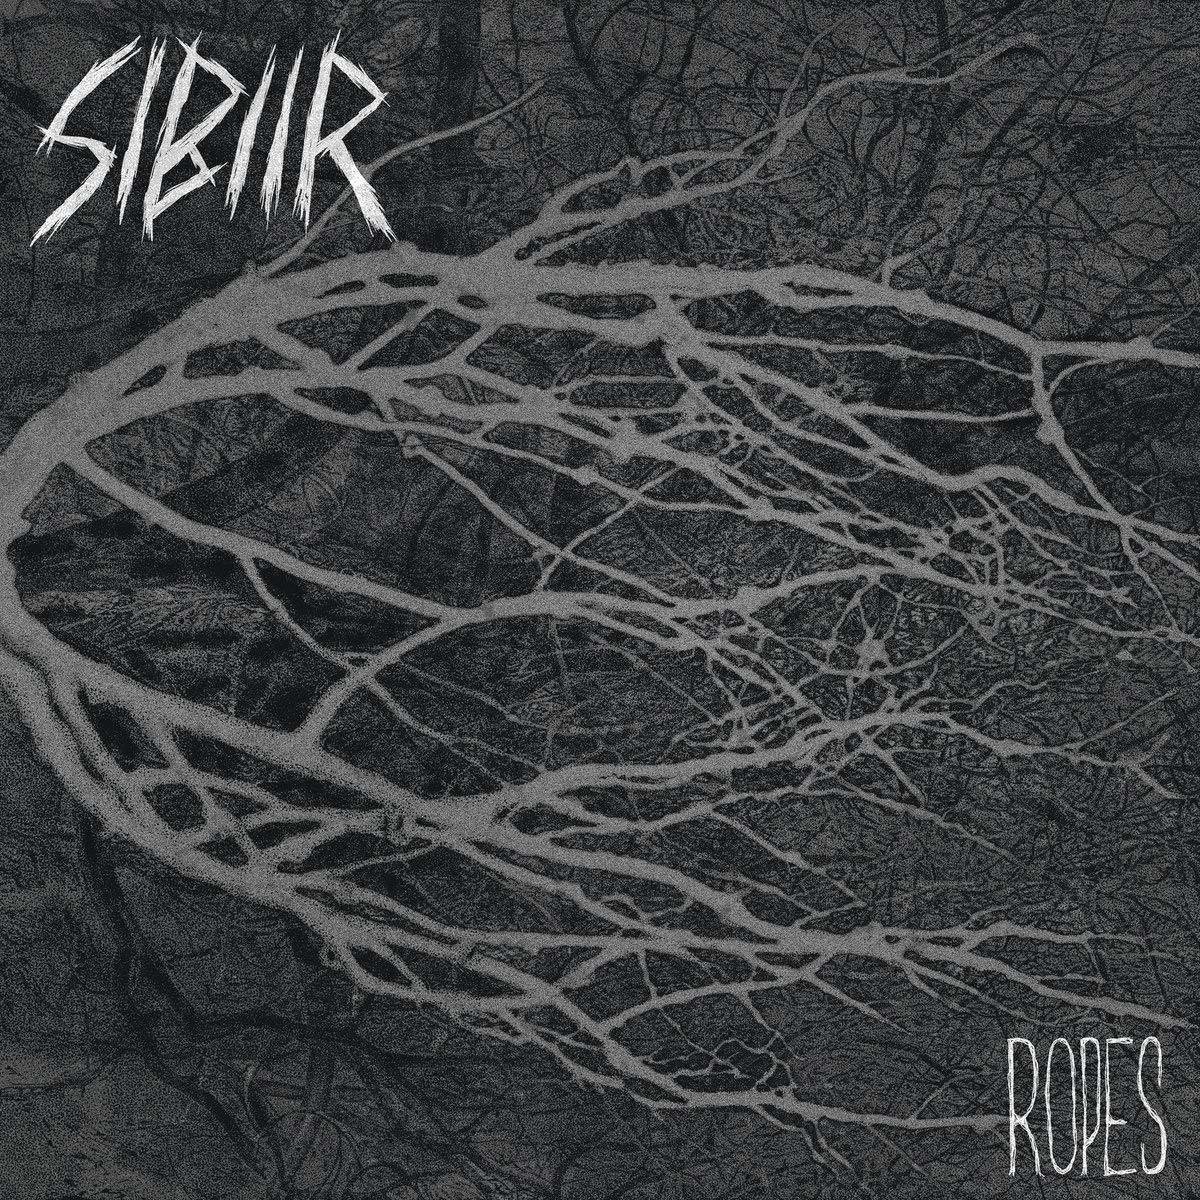 Vinyl Record Sibiir - Ropes (LP)